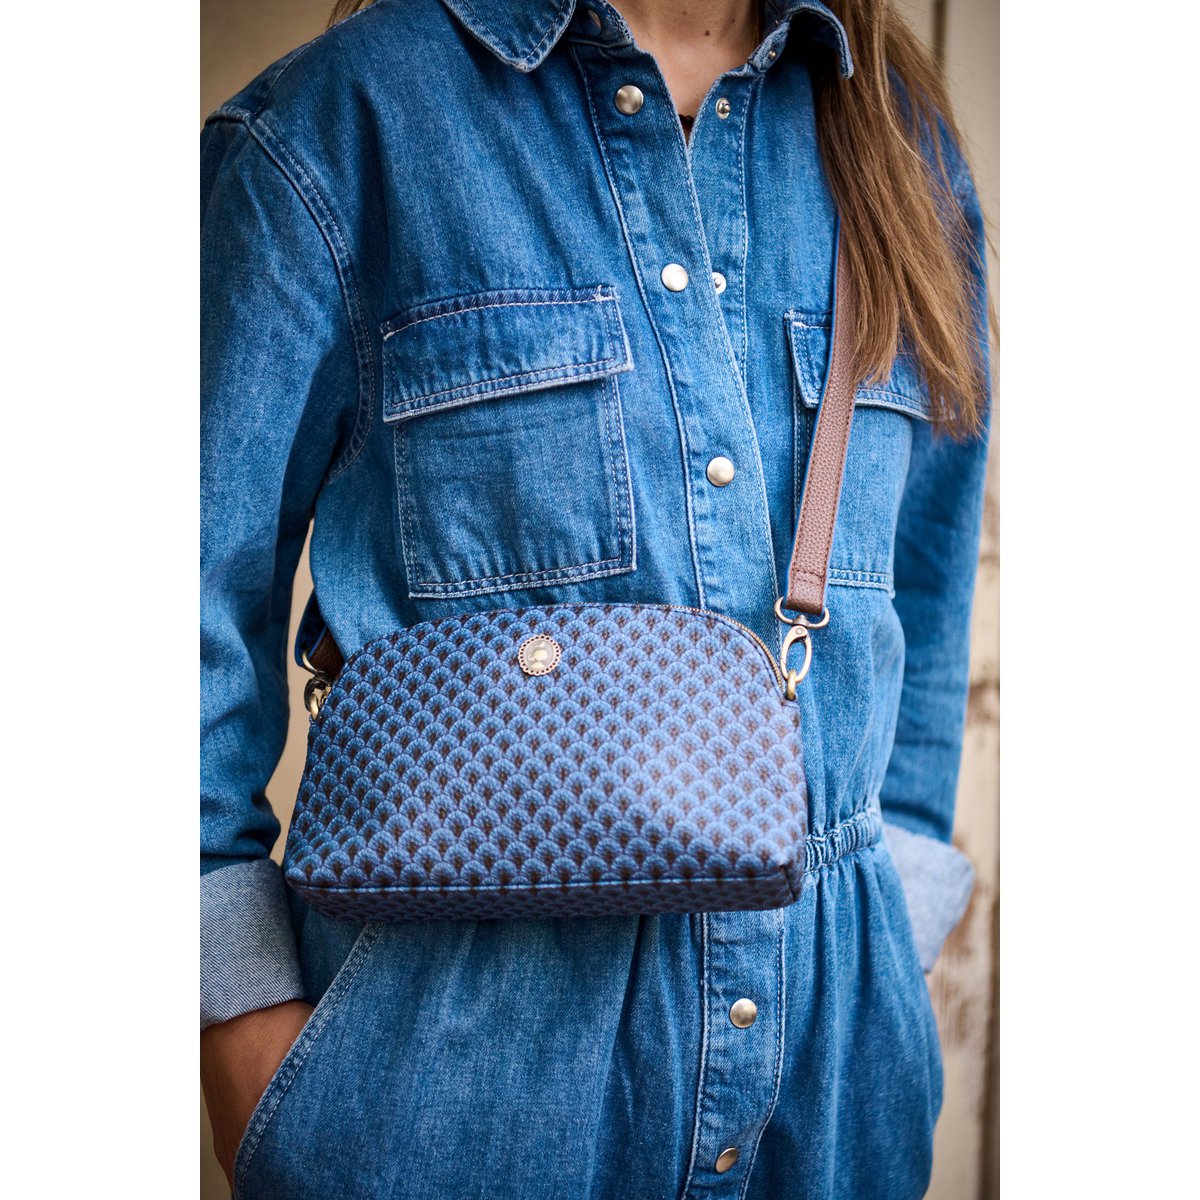 Cross Body Bag Small Suki Blue 22x13.5x6cm